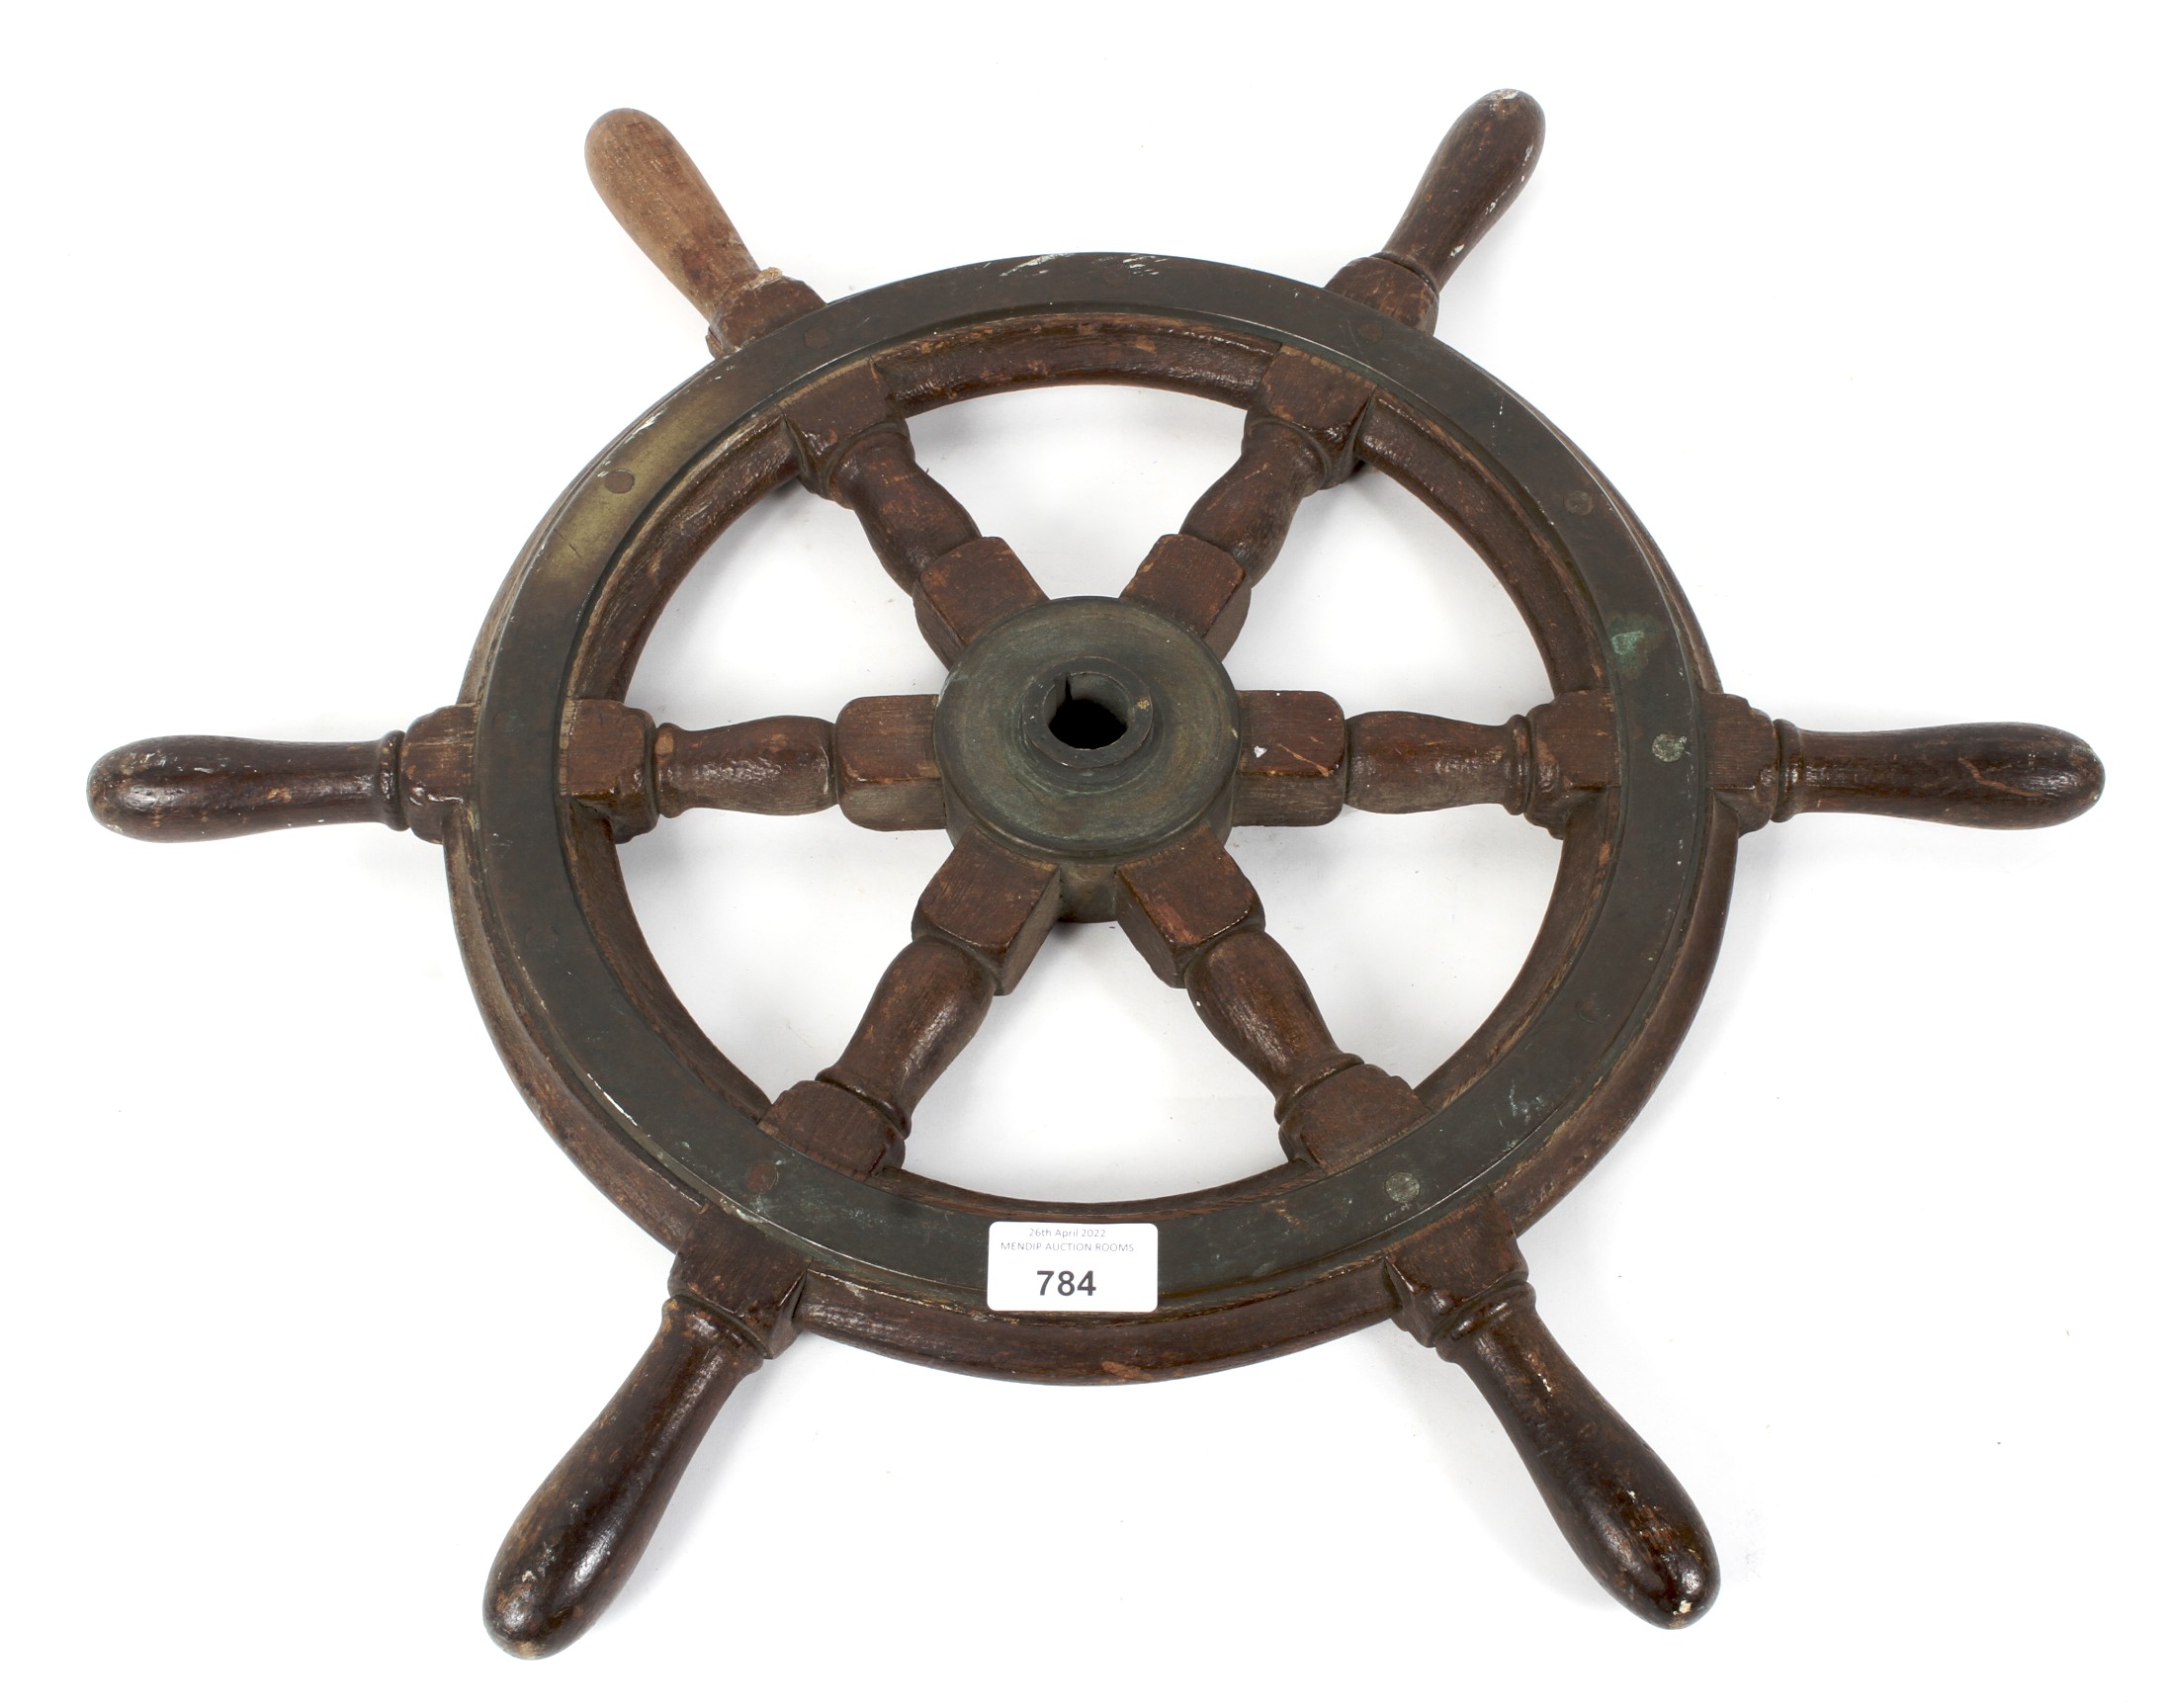 A vintage wooden metal-mounted six-spoke ships wheel,